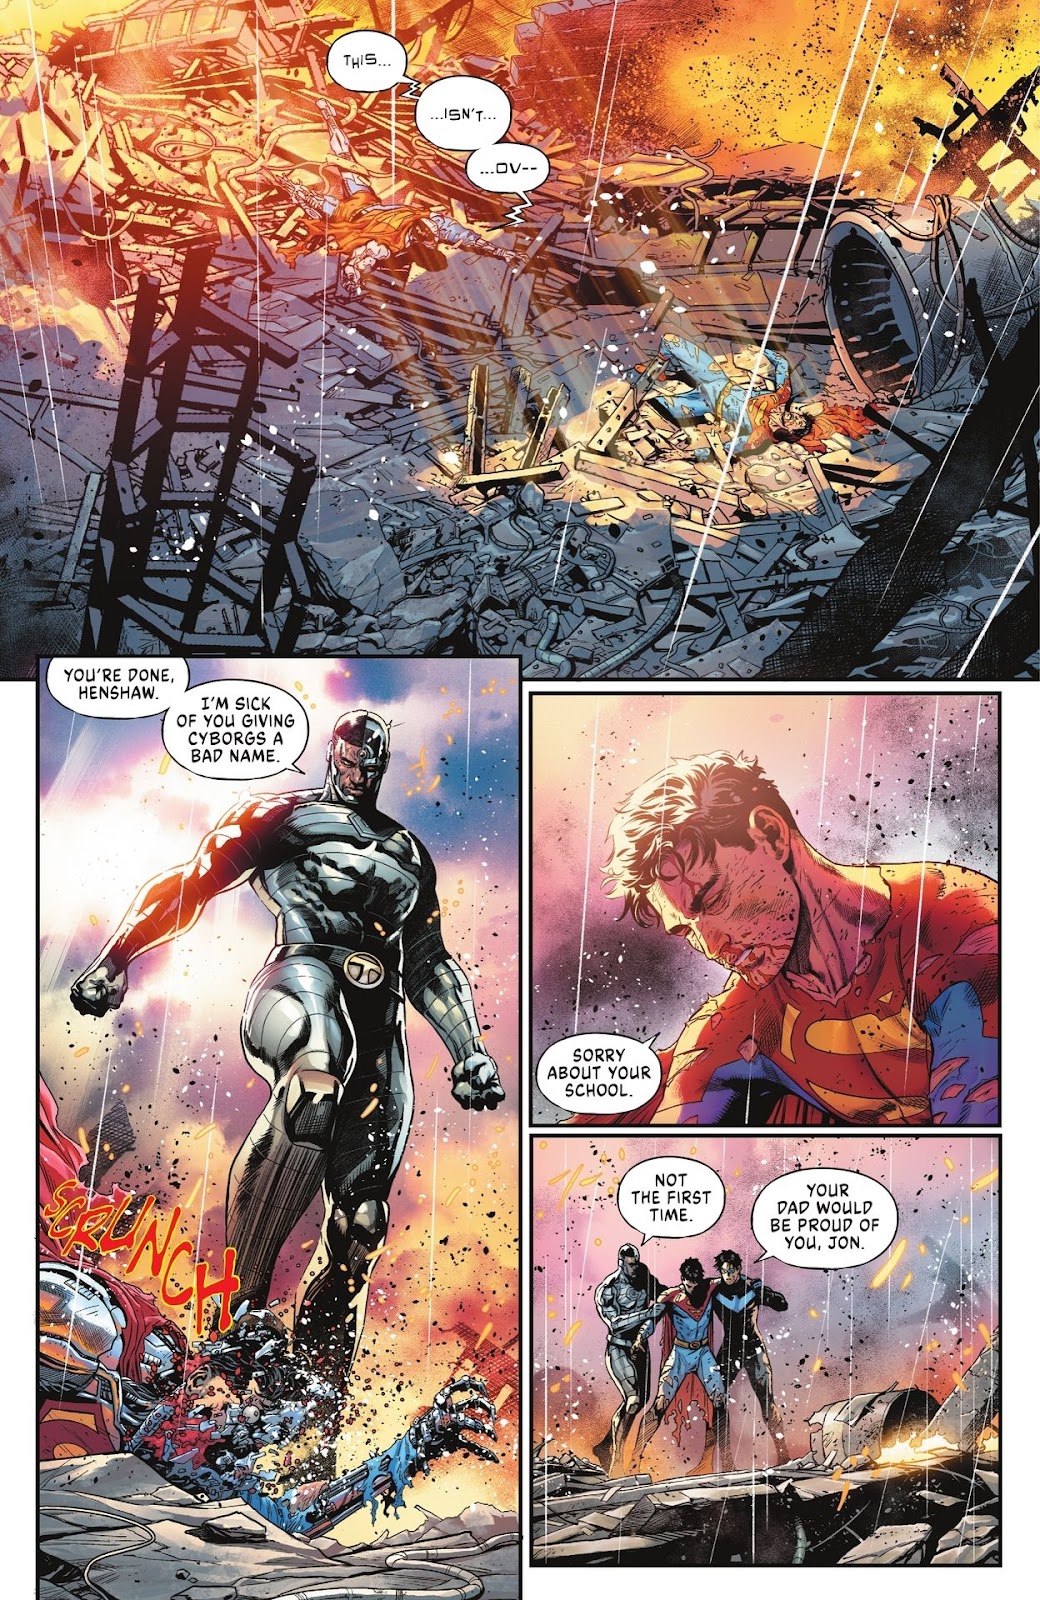 Superman VS Cyborg-Superman (Dark Crisis)